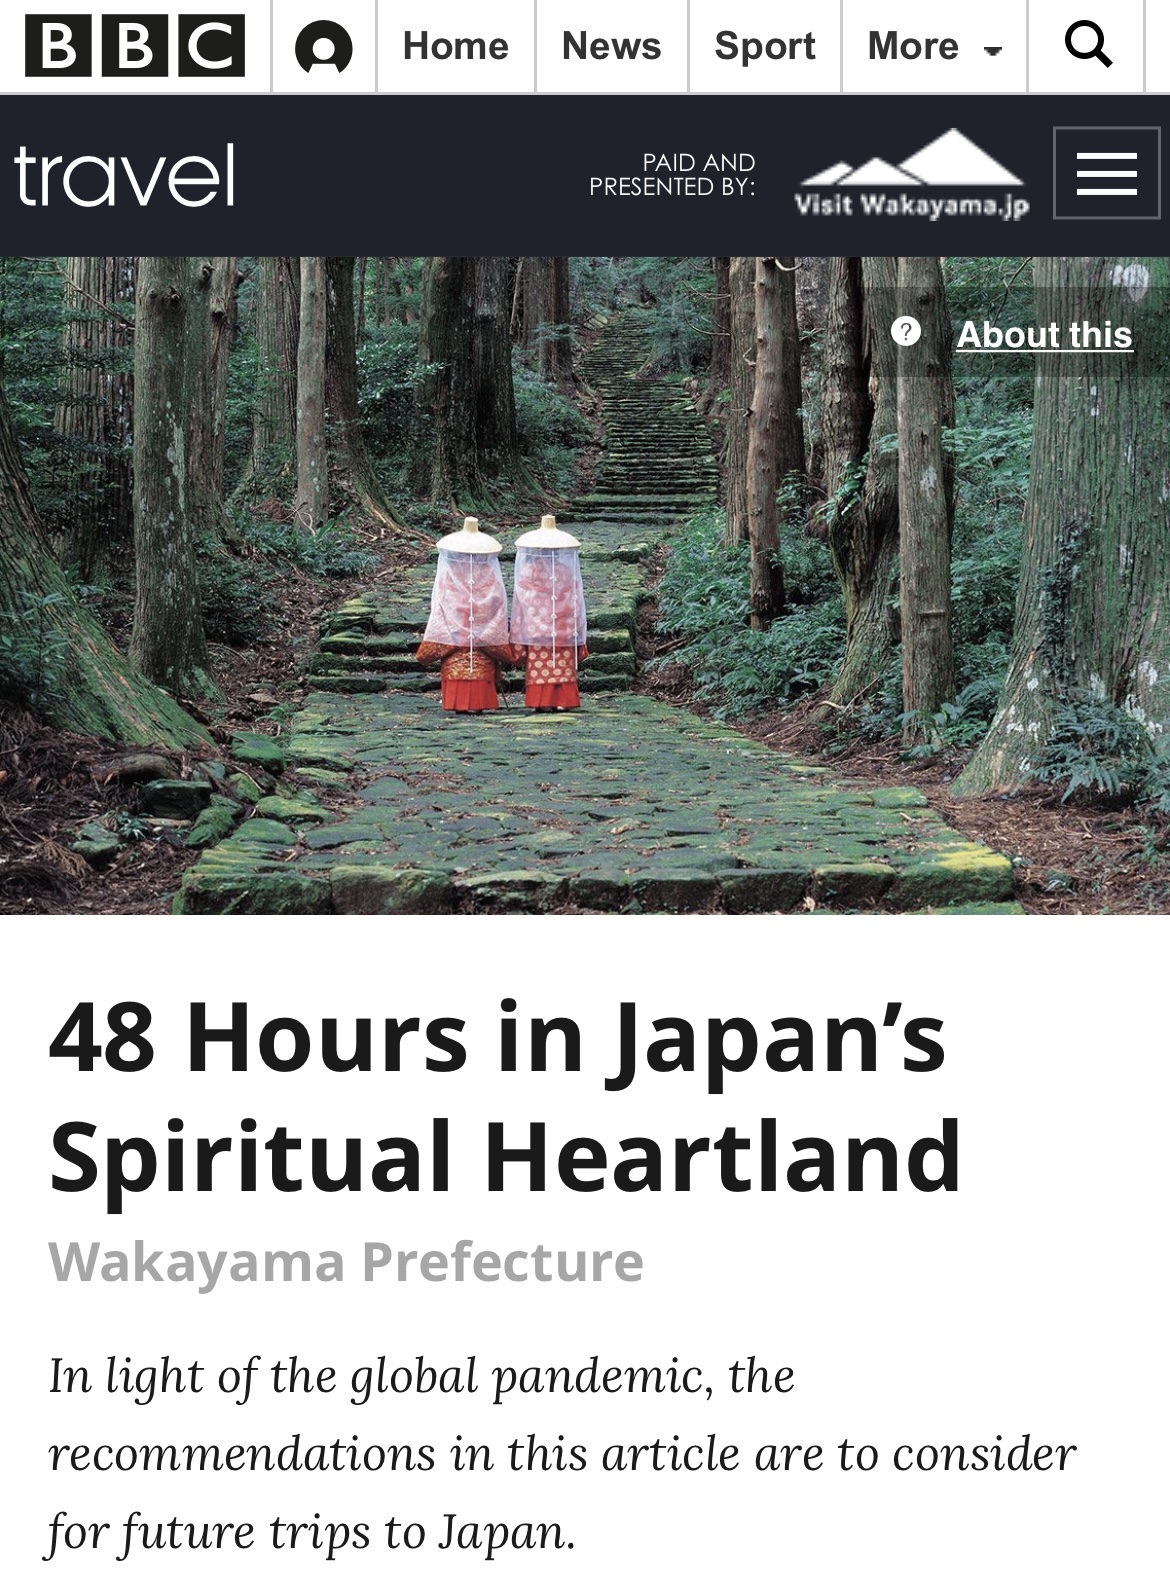 Wakayama Prefecture - World Heritage 15th Anniversary (2020)